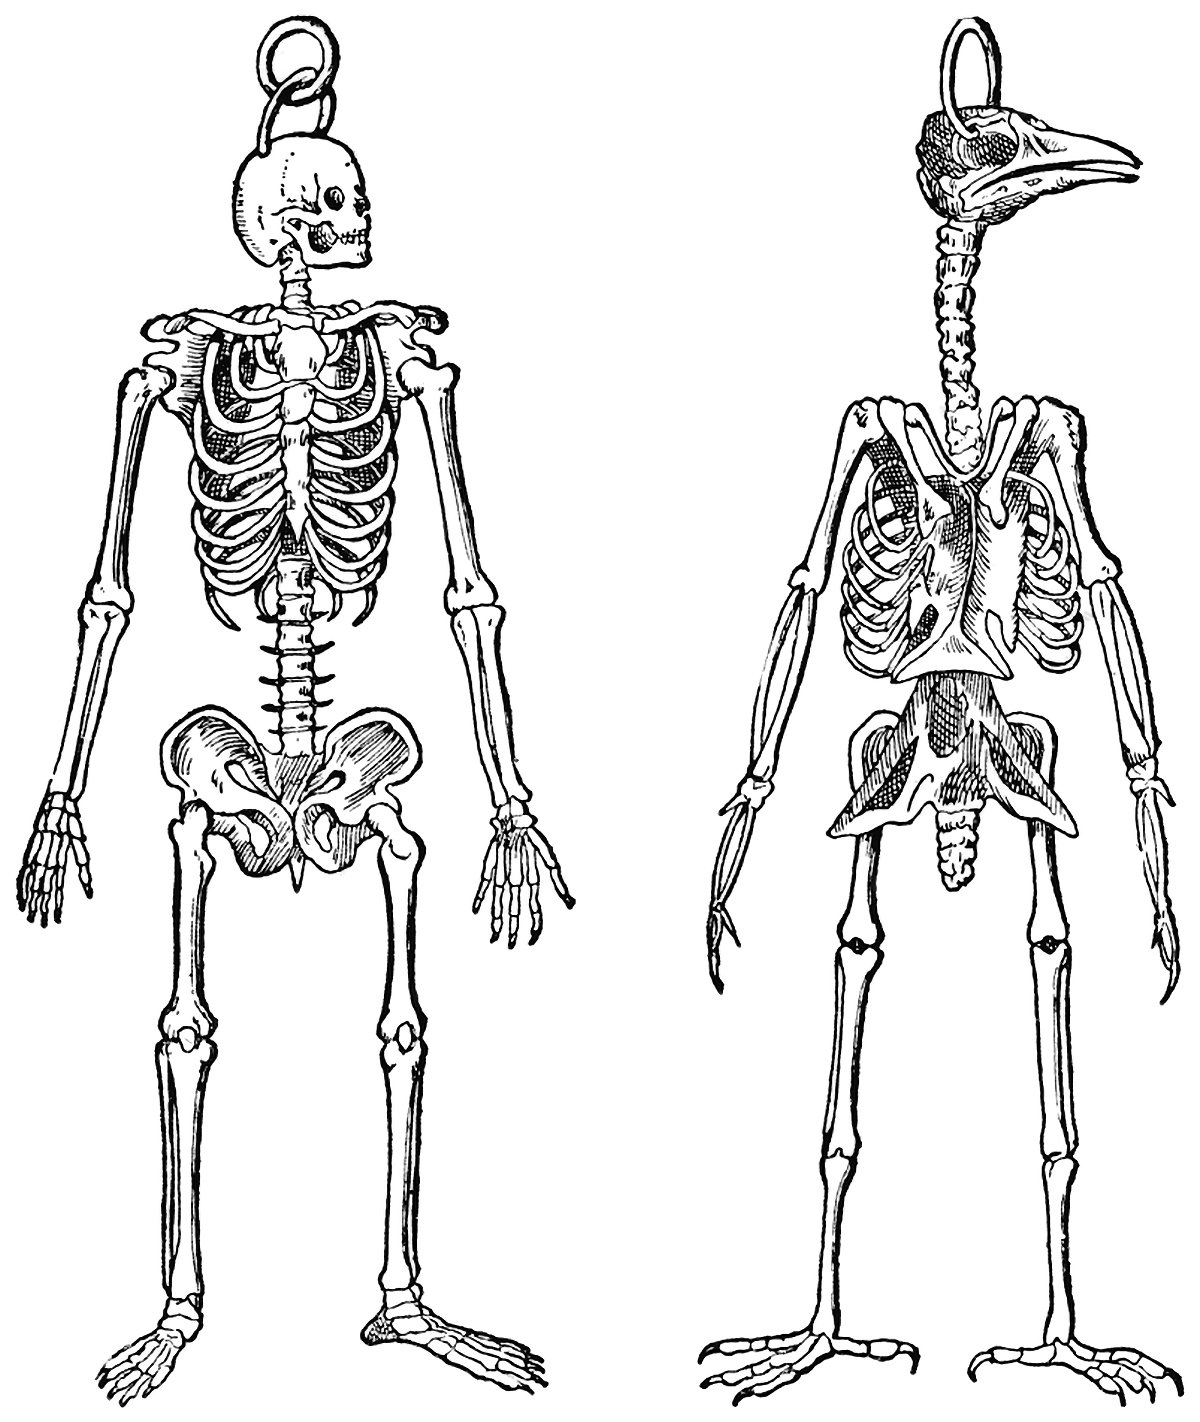 1897-ManBirdSkeletons.jpg